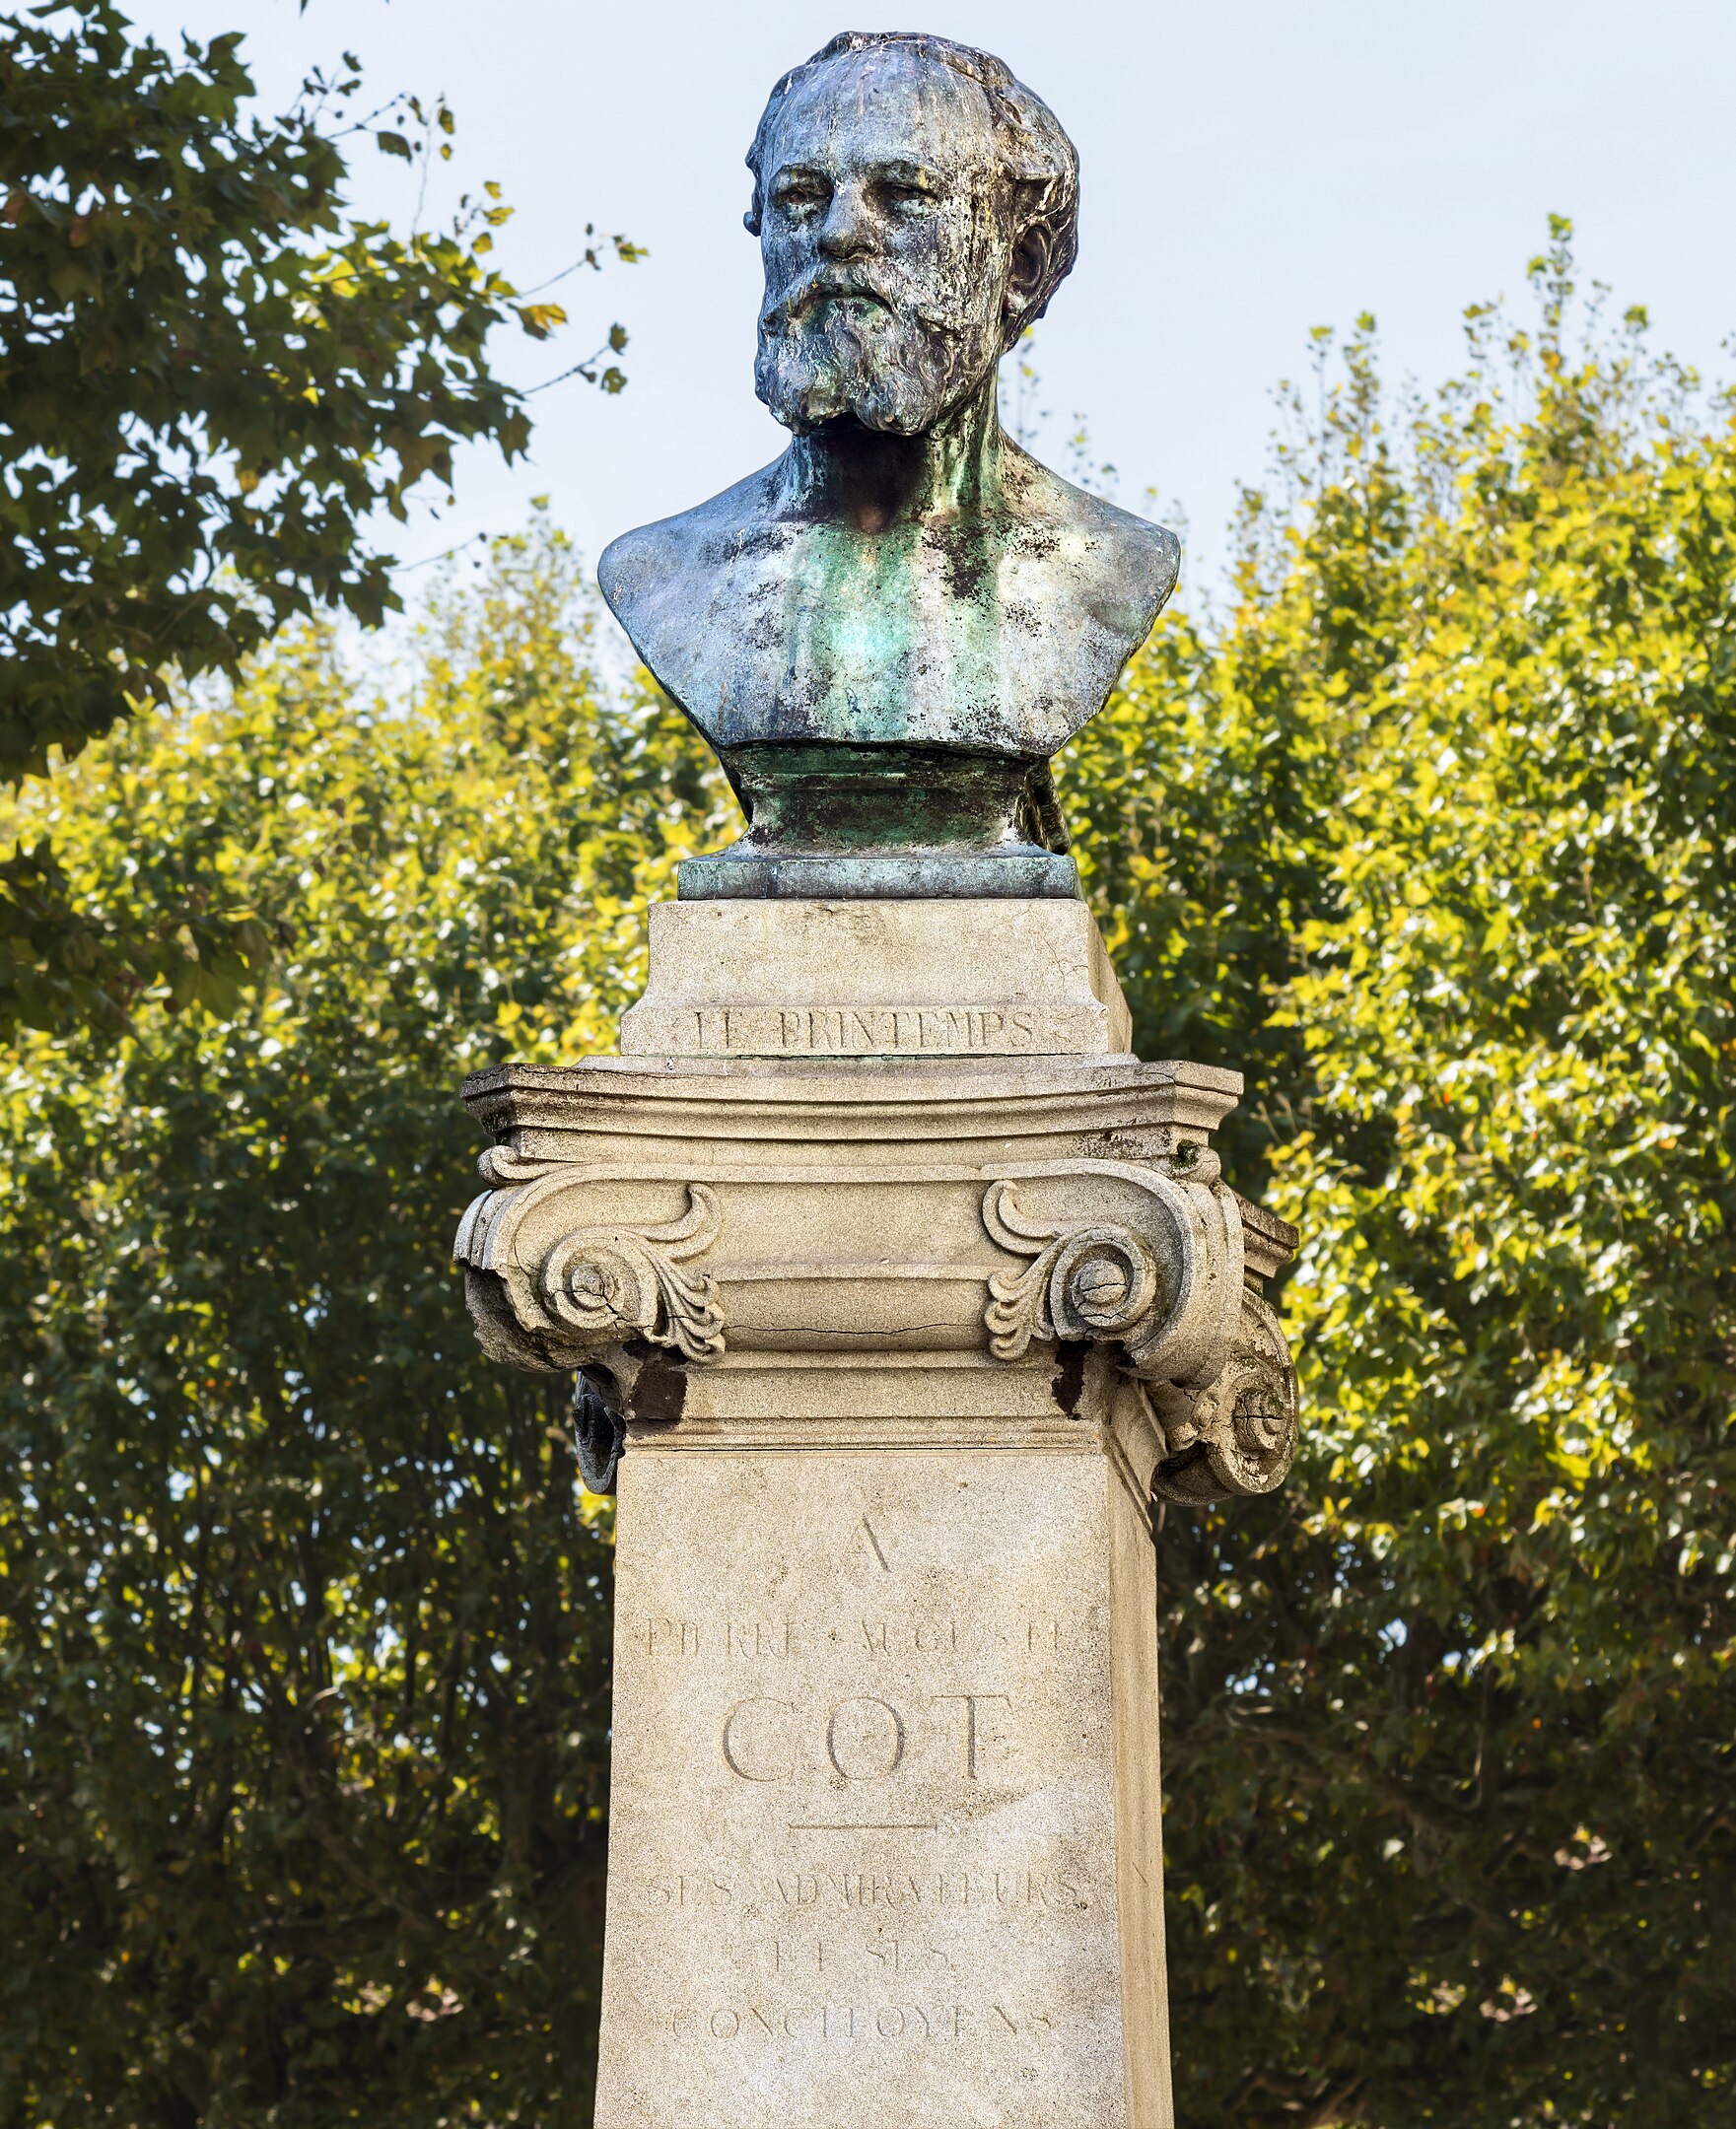 Pierre Auguste Cot - 17 februar, 1837 - 2 augustus, 1883